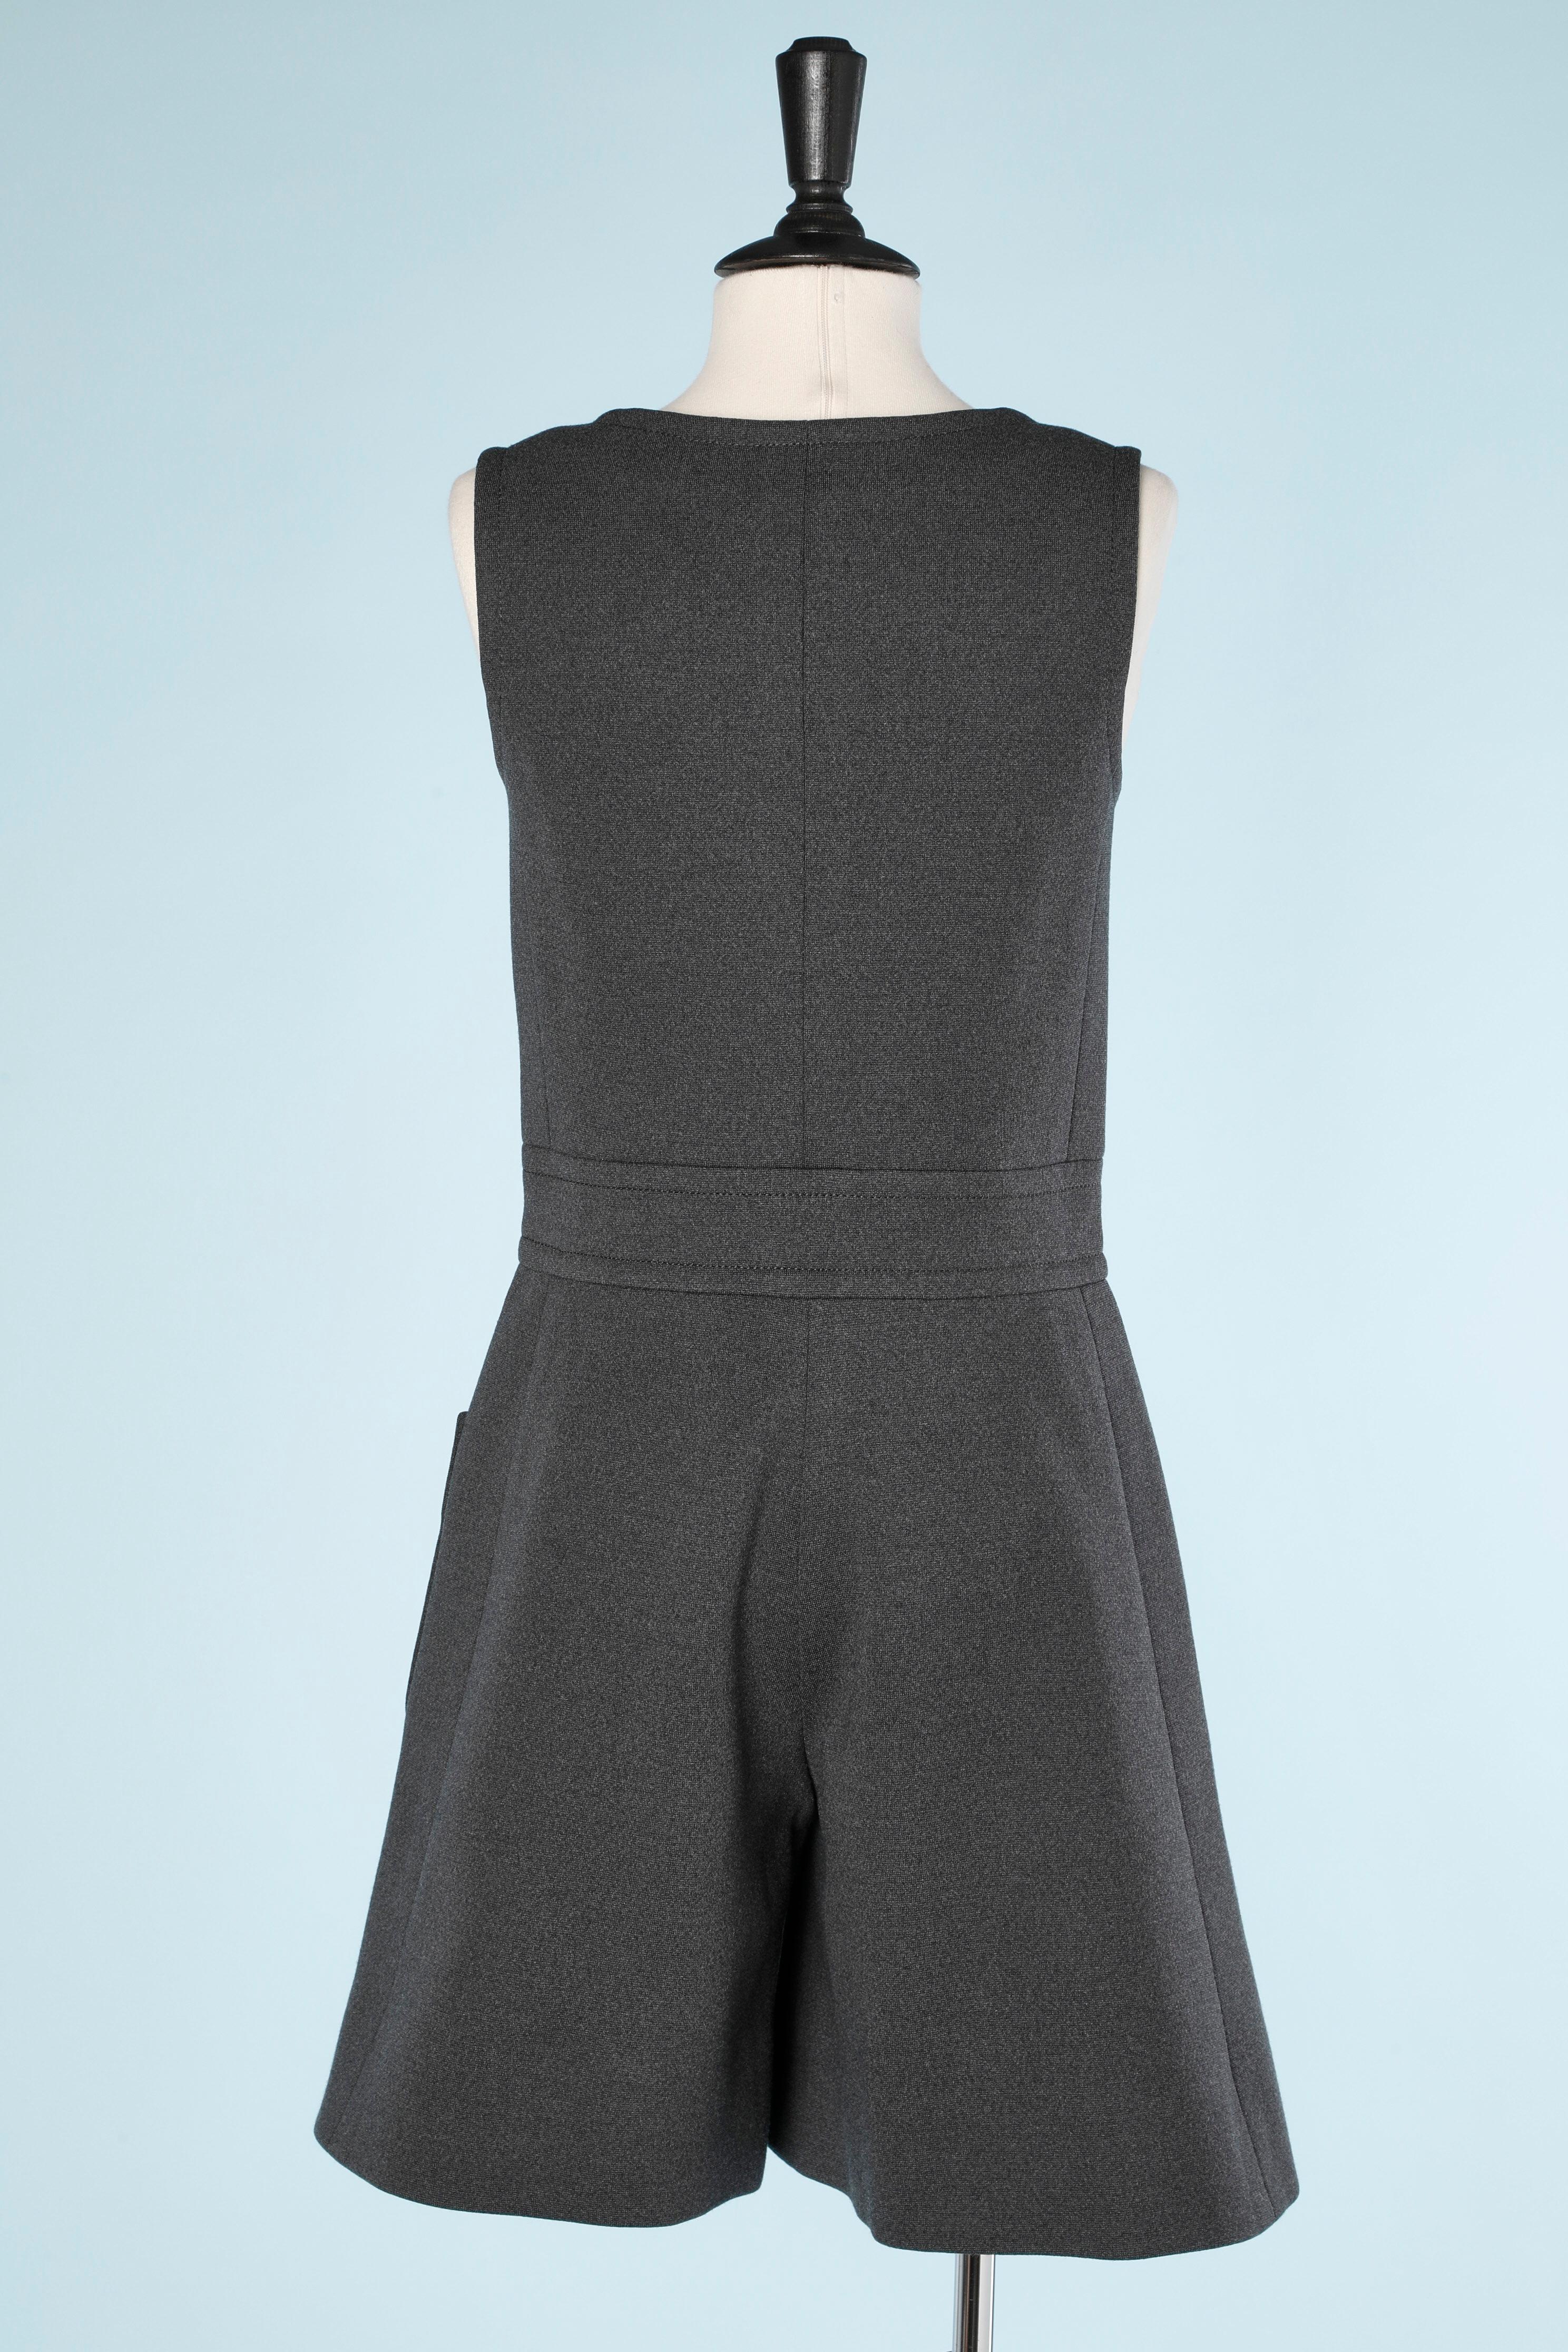 Grey Bermuda jumpsuit in wool Miss Dior for Holt Renfrew 2